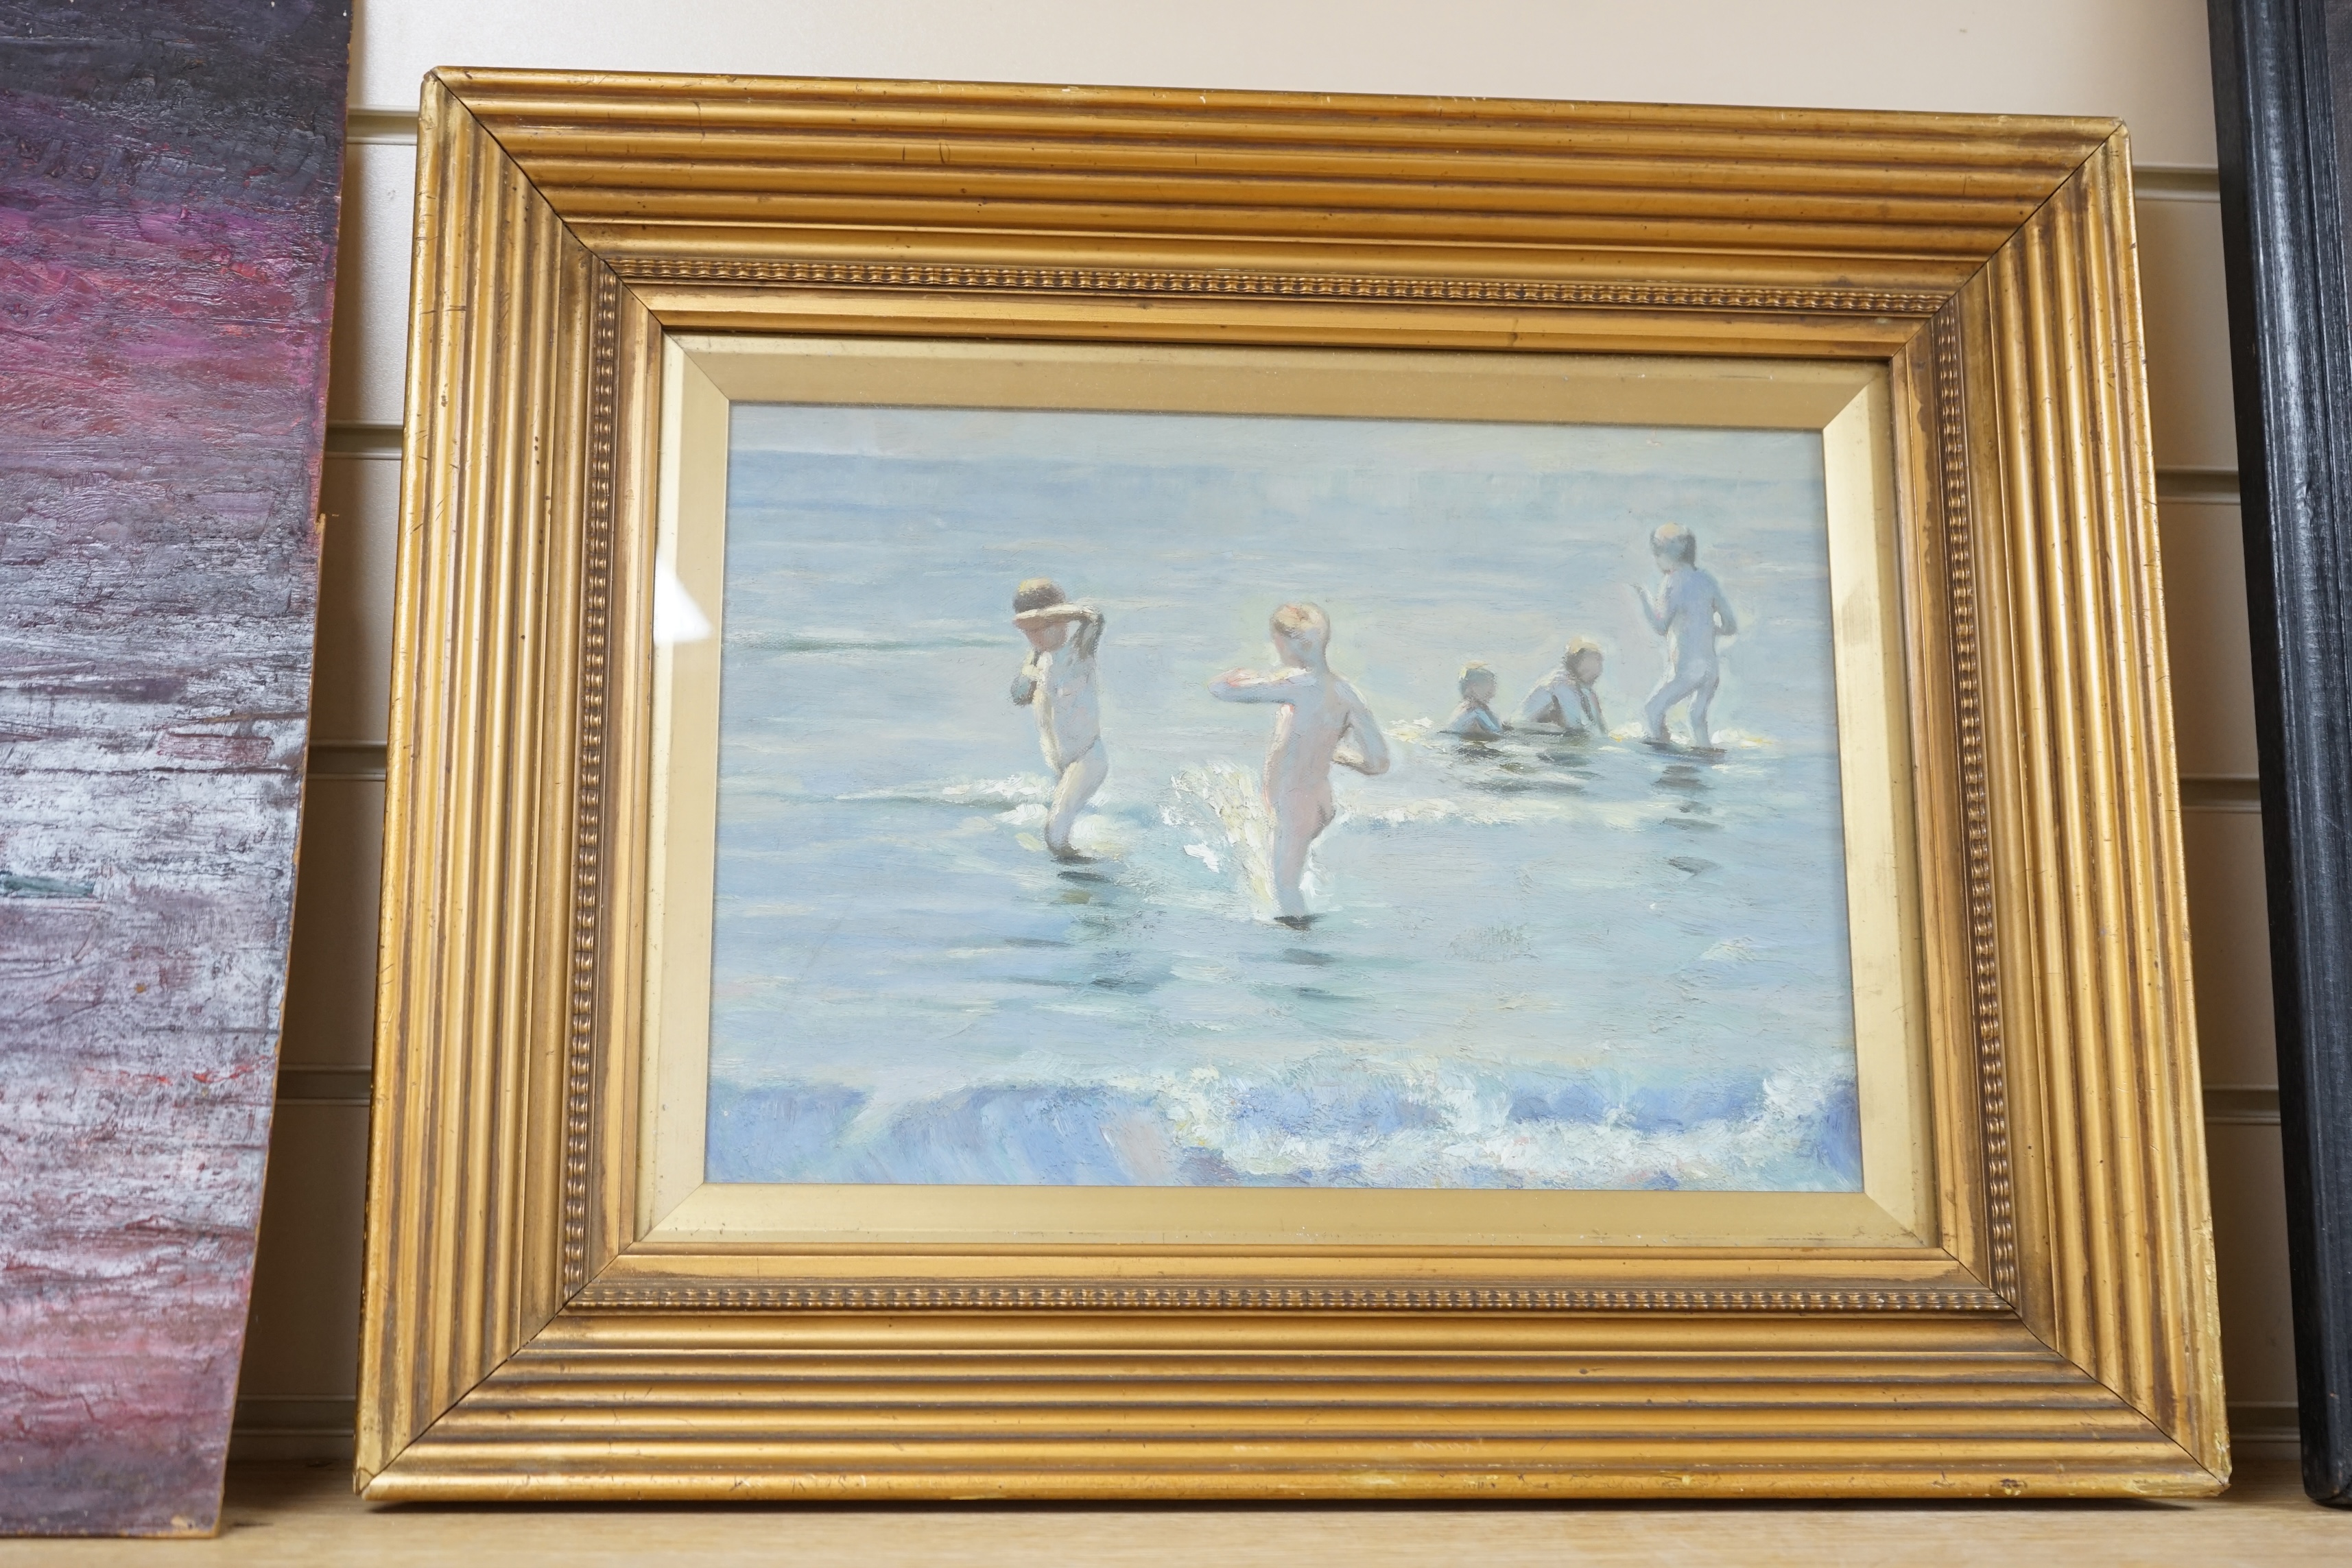 Impasto oil on canvas board, Children bathing, unsigned, 24 x 34cm, gilt framed. Condition - good